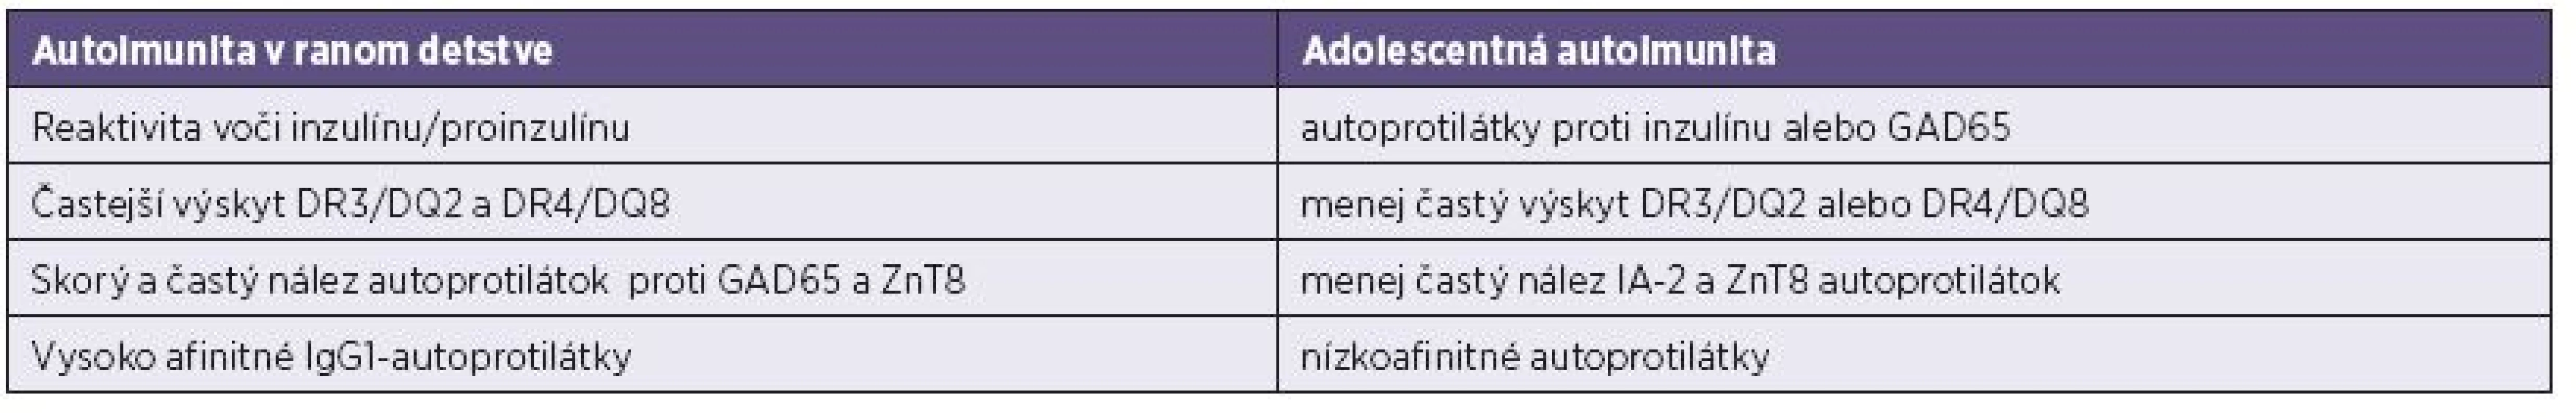 Porovnanie typických čŕt autoimunitných reakcií v ranom detstve a v adolescentnom veku [41, 84]
Table 5. Comparison of typical characteristics of autoimmune responses in early infancy and adolescence [41, 84]